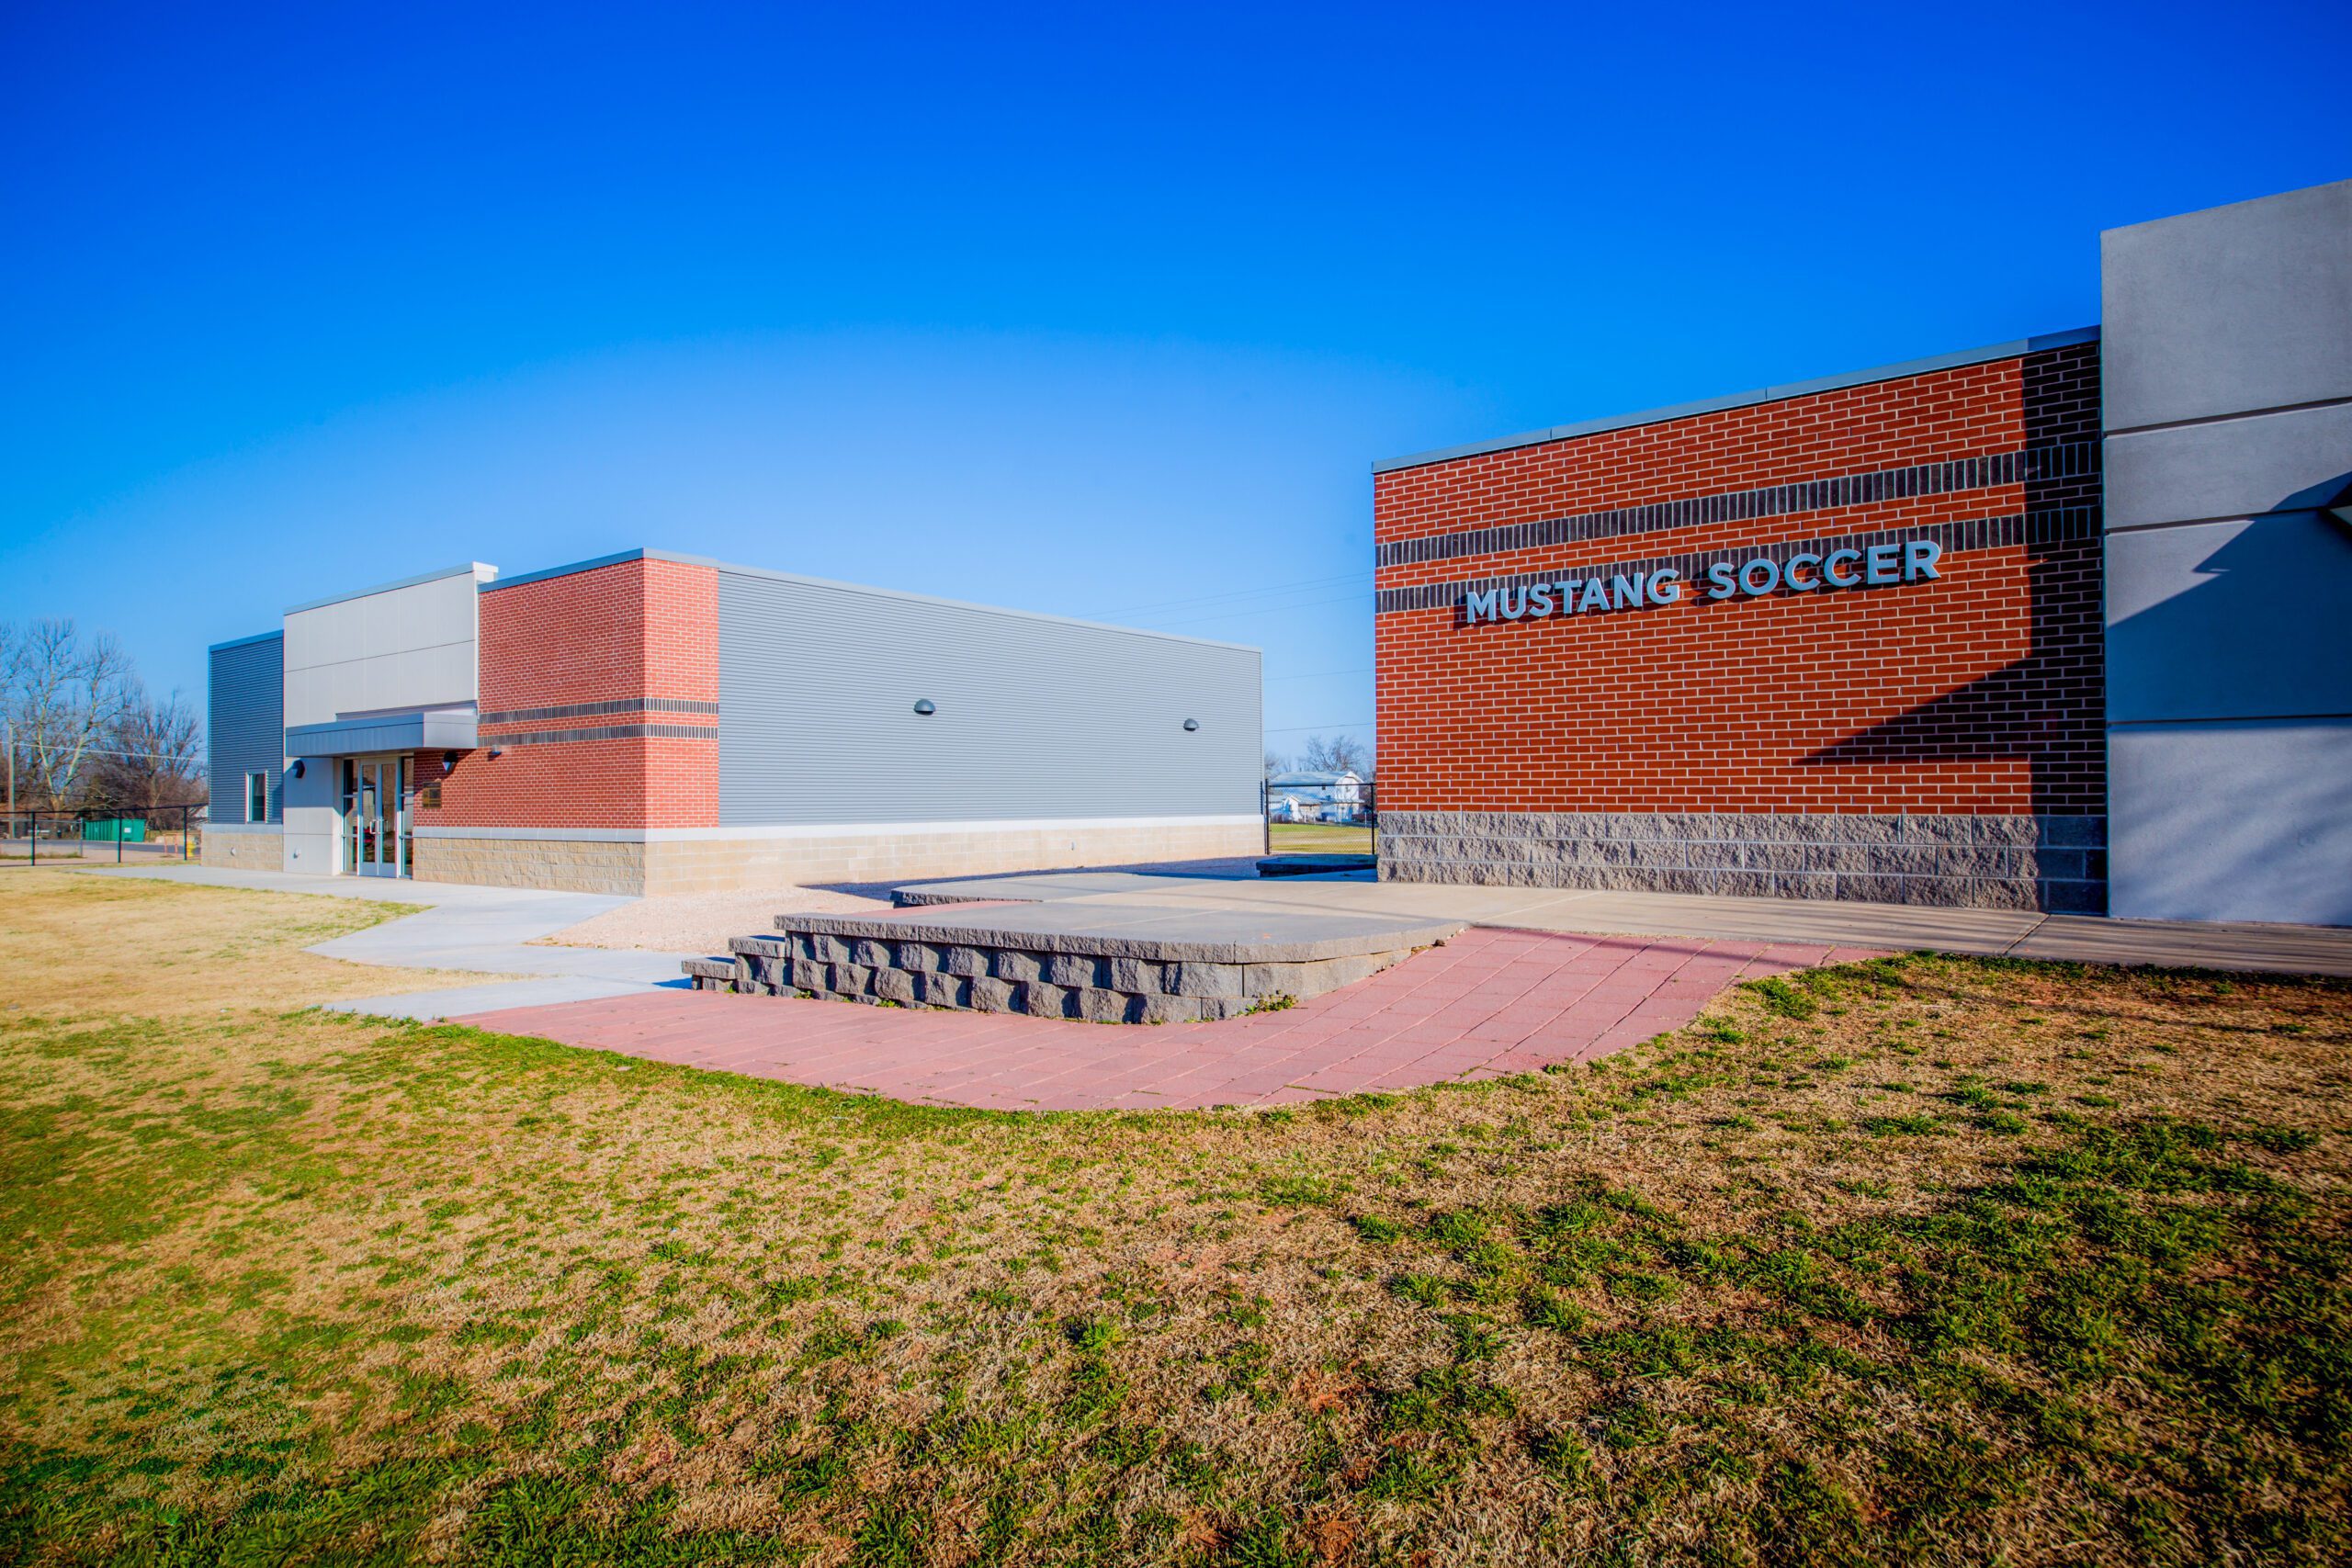 Exterior of Mustang High School Soccer building.